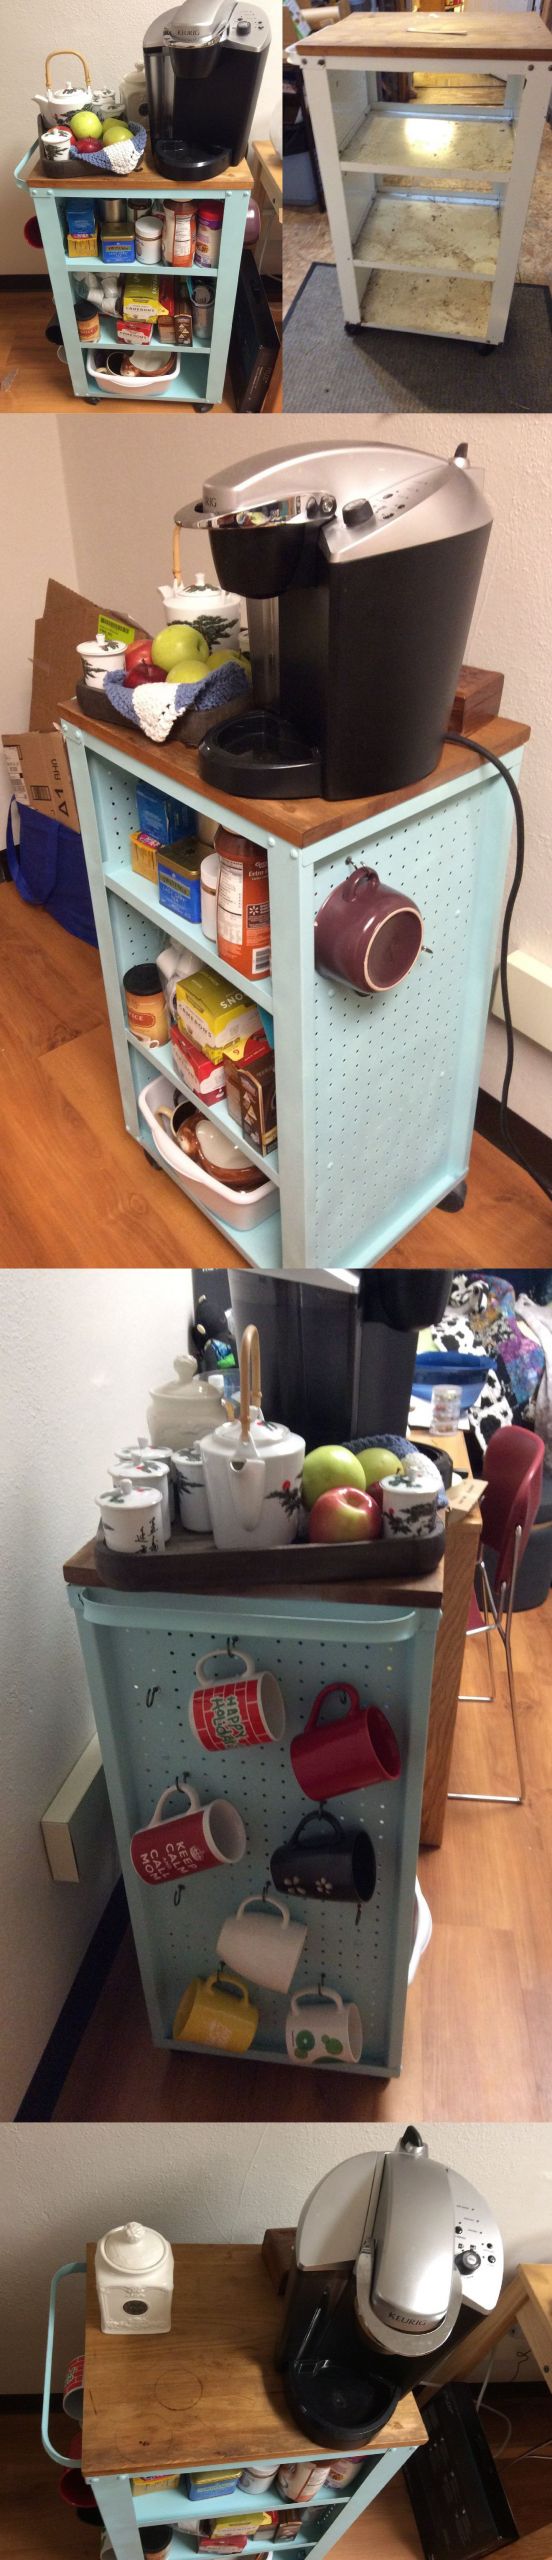 DIY Dorm Organization
 DIY Dorm room cart before and after kitchen cart peg